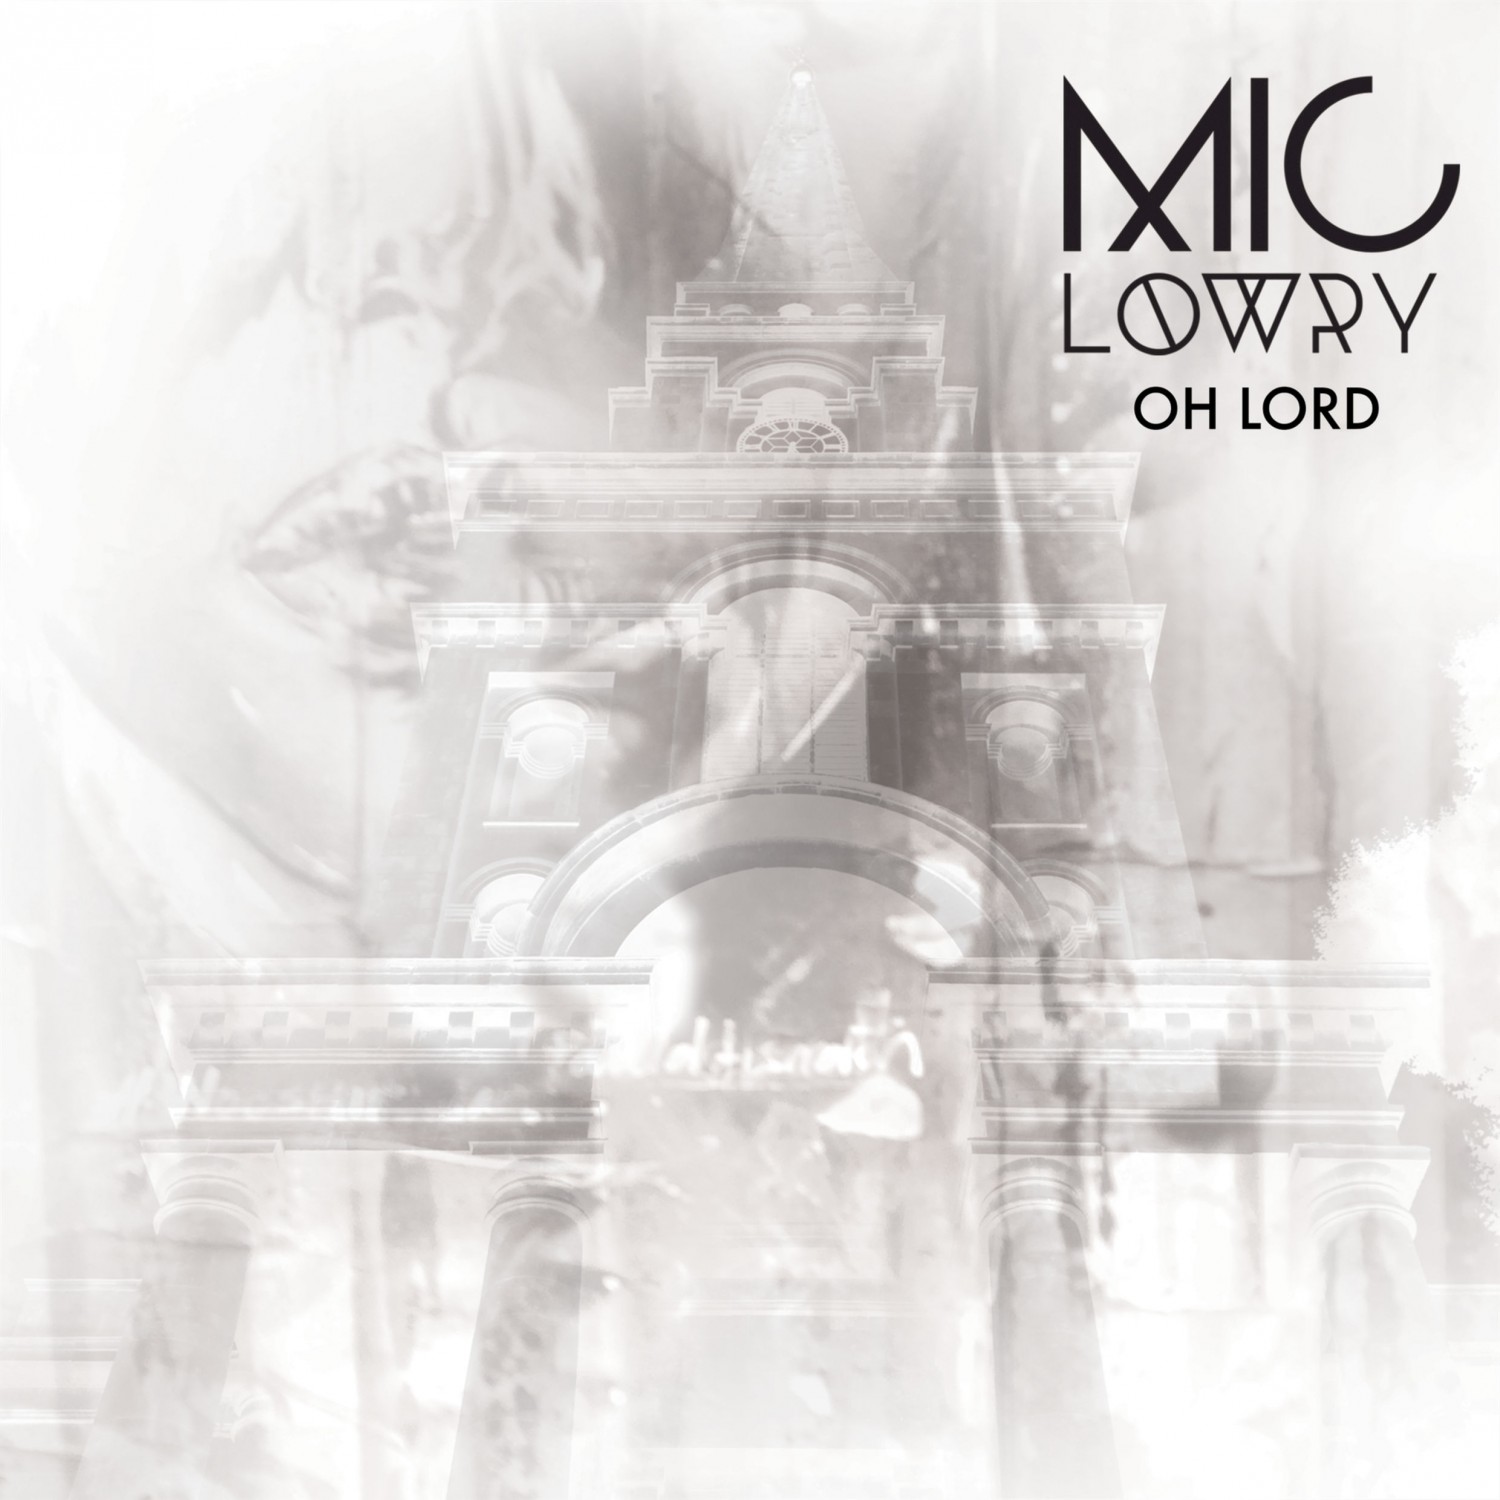 mic-lowry-oh-lord-2016-2480x2480